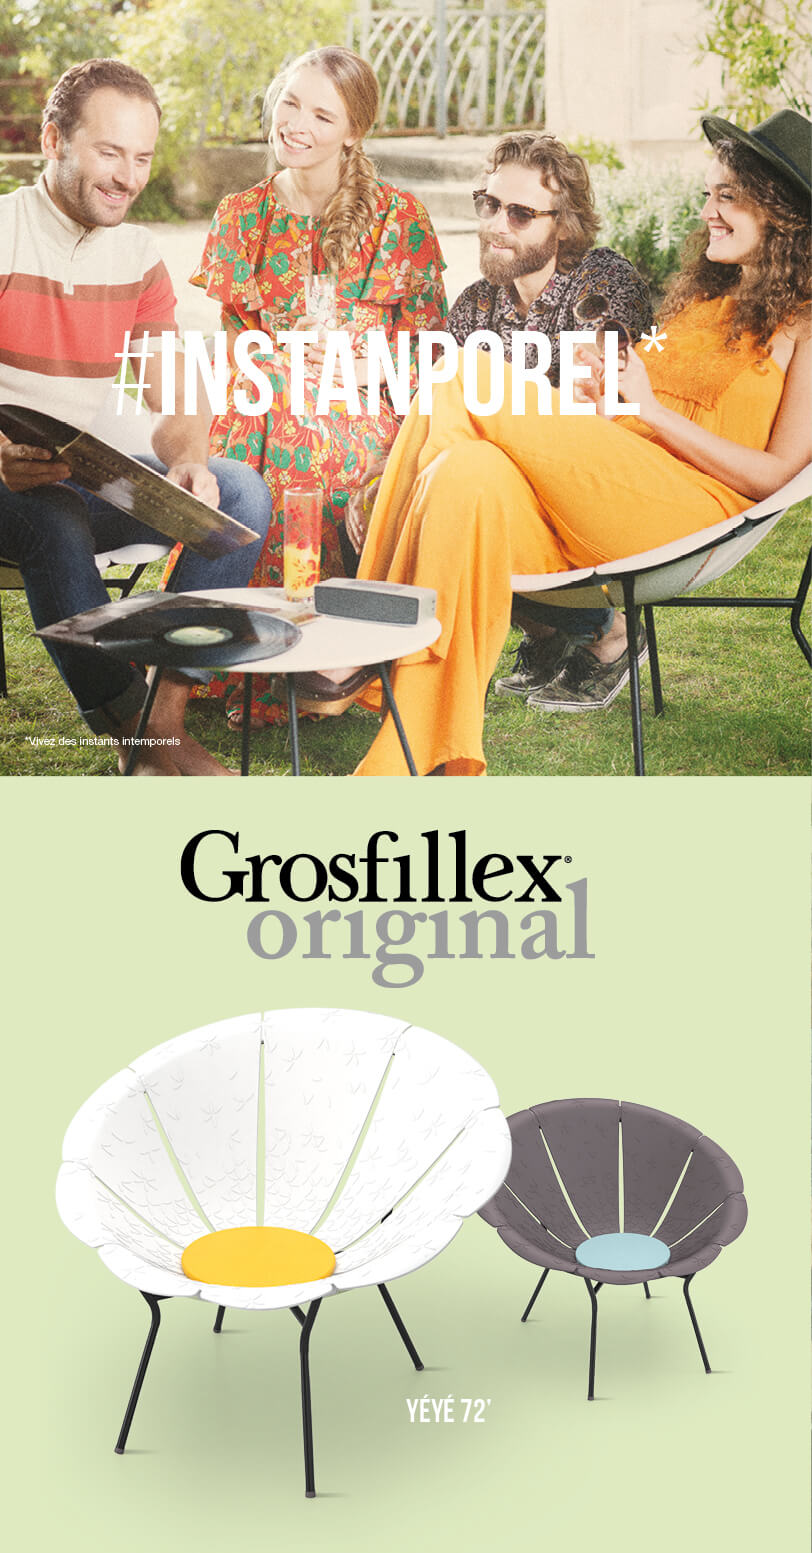 GROSFILLEX-Original-IMG-GALERIE-812px